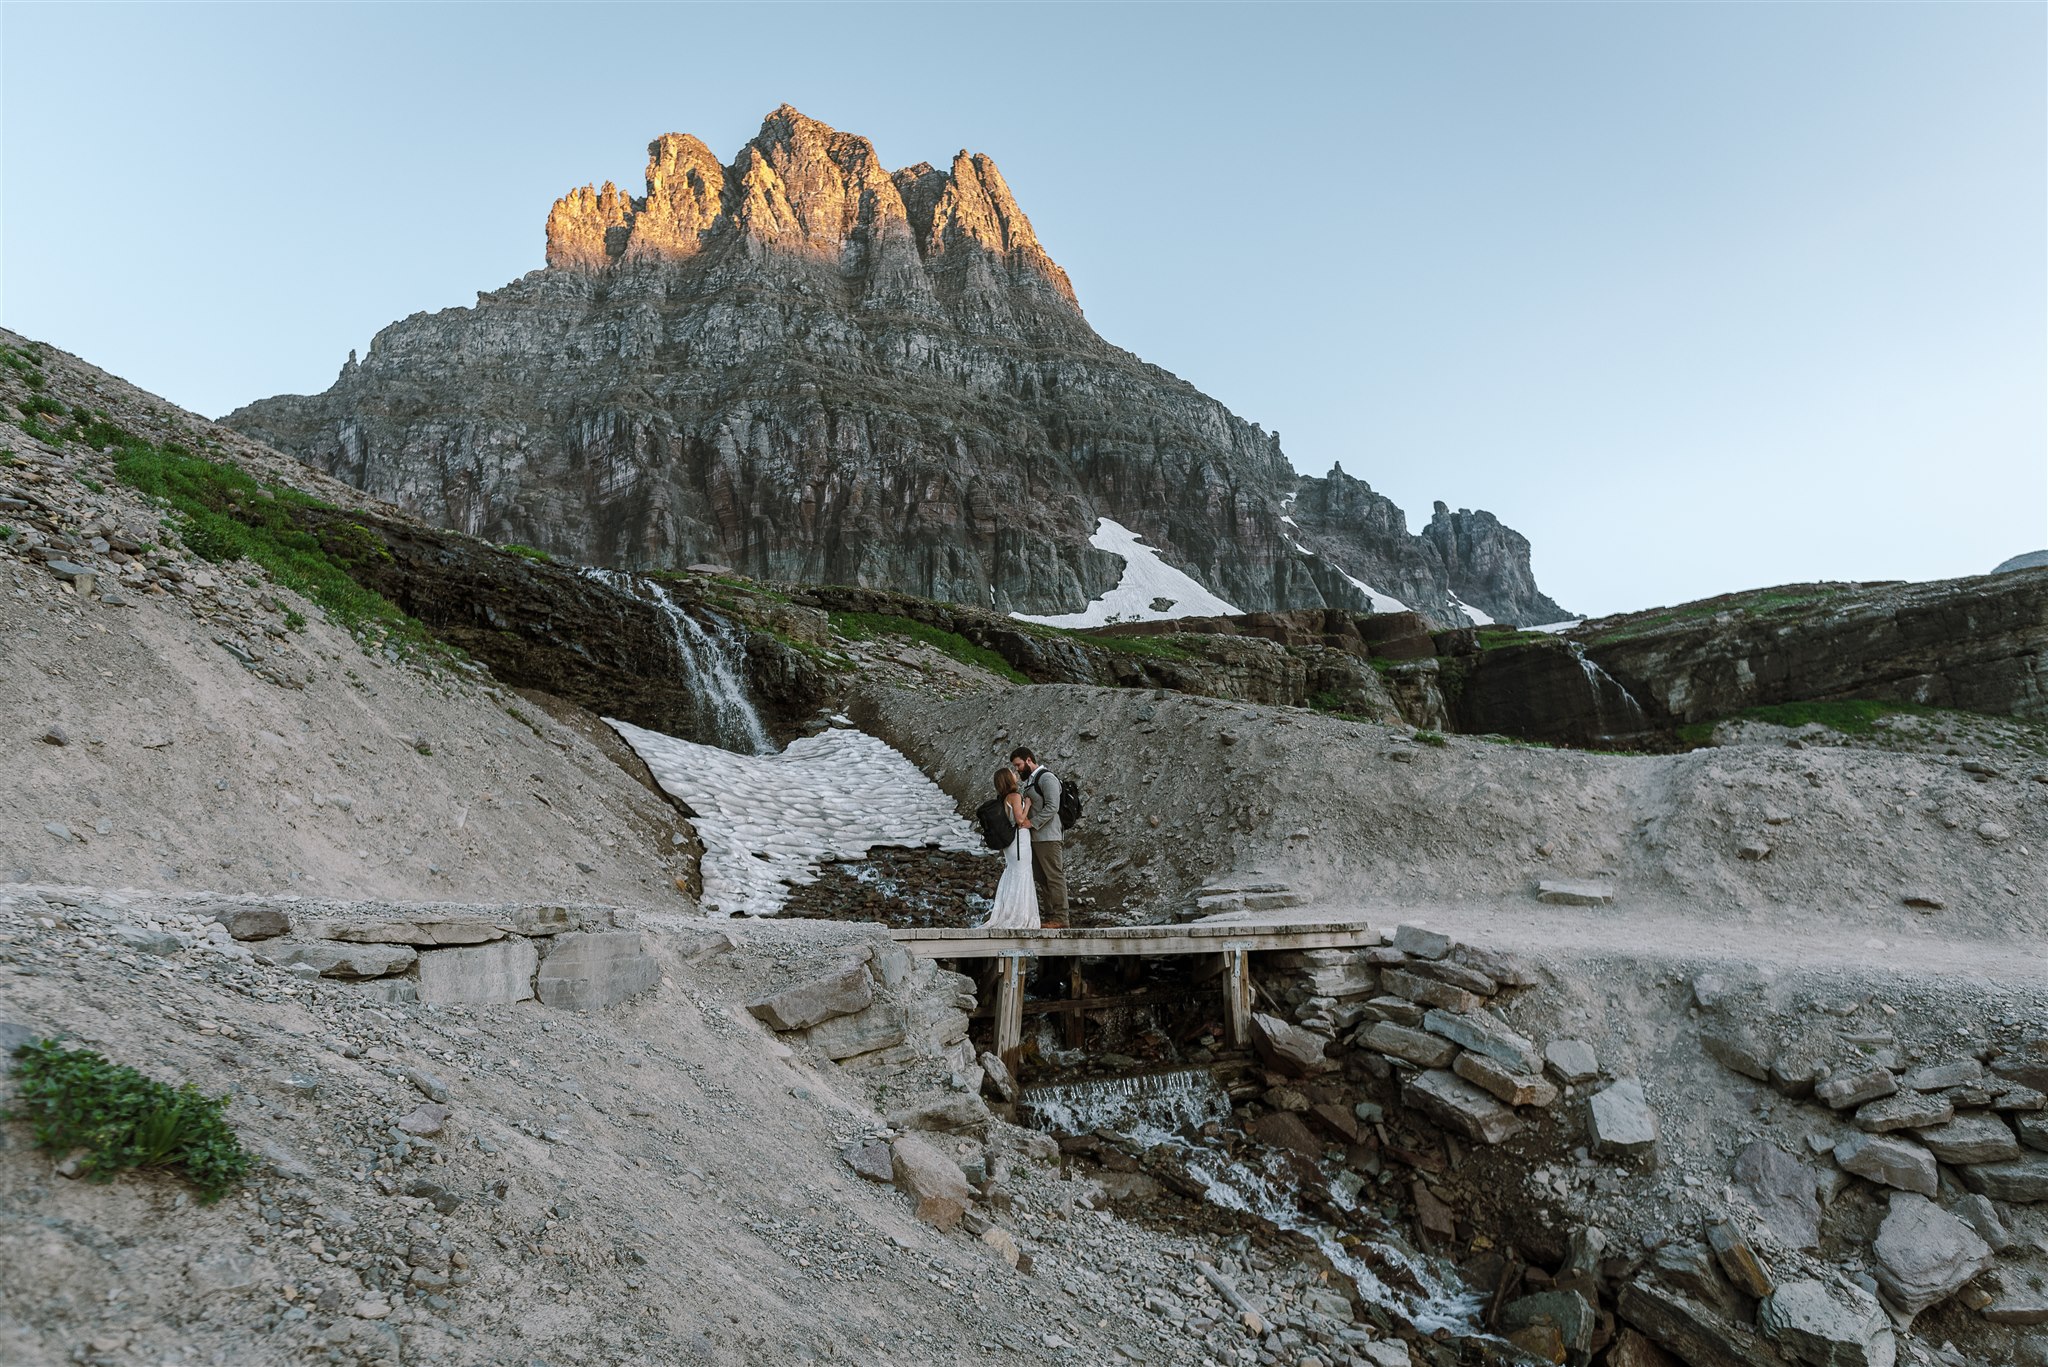 Sunrise Elopement in Glacier National Park | Mountainside Bride